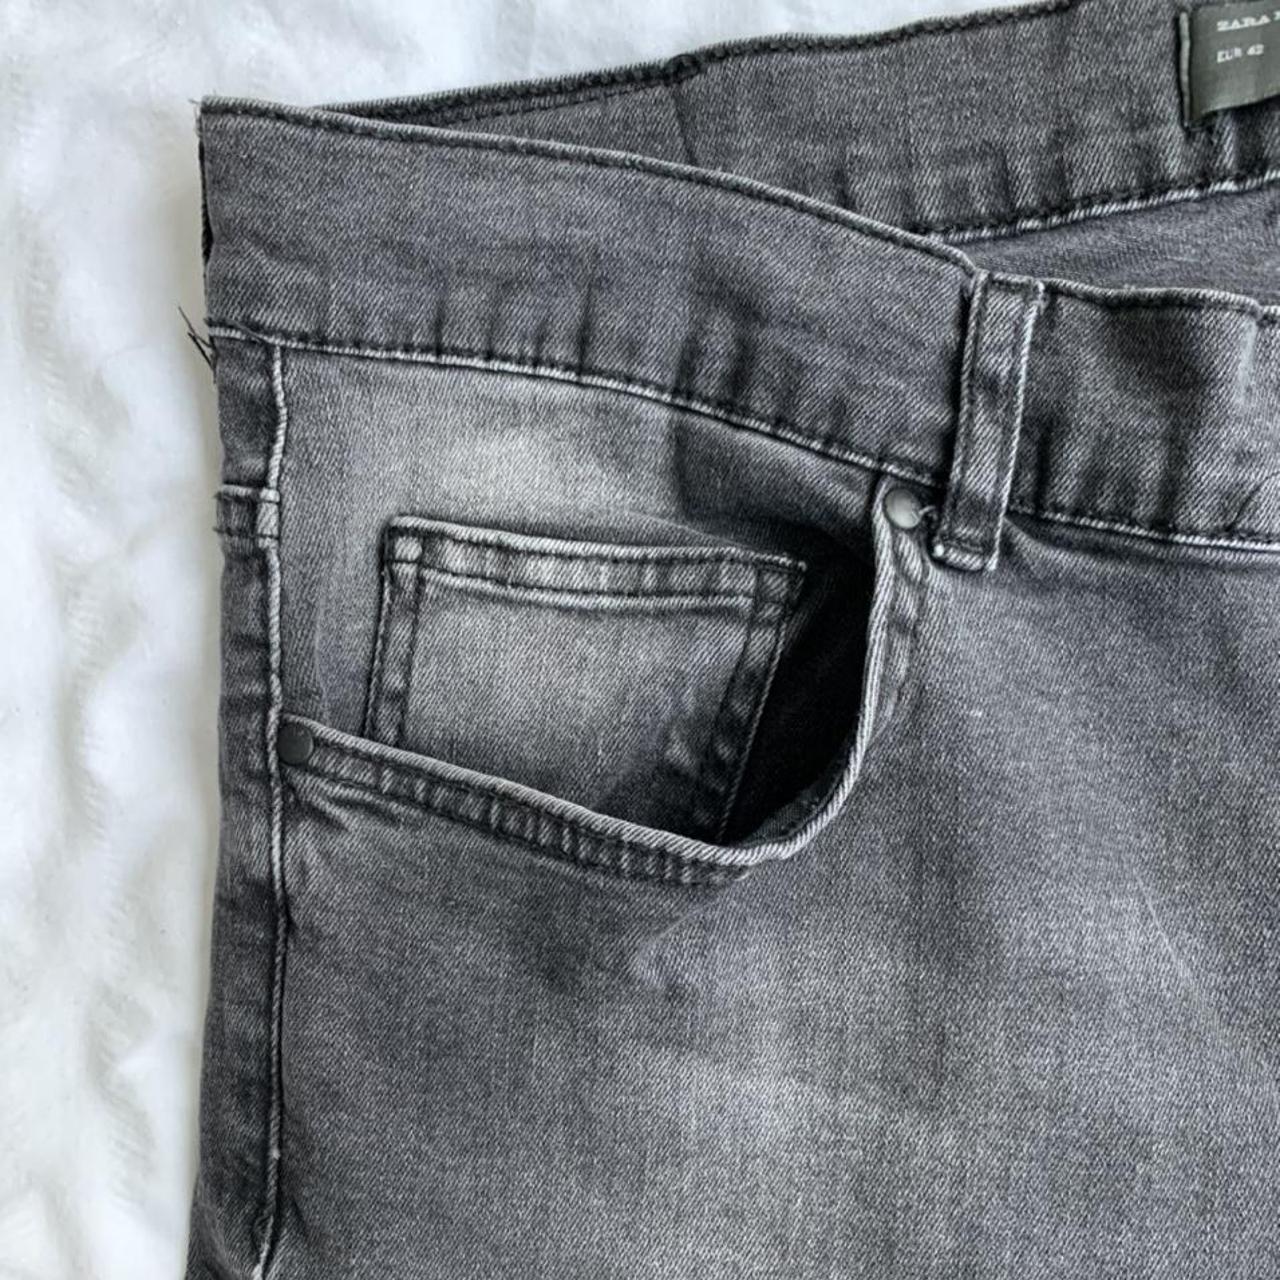 Product Image 3 - Zara black/charcoal mens skinny zip